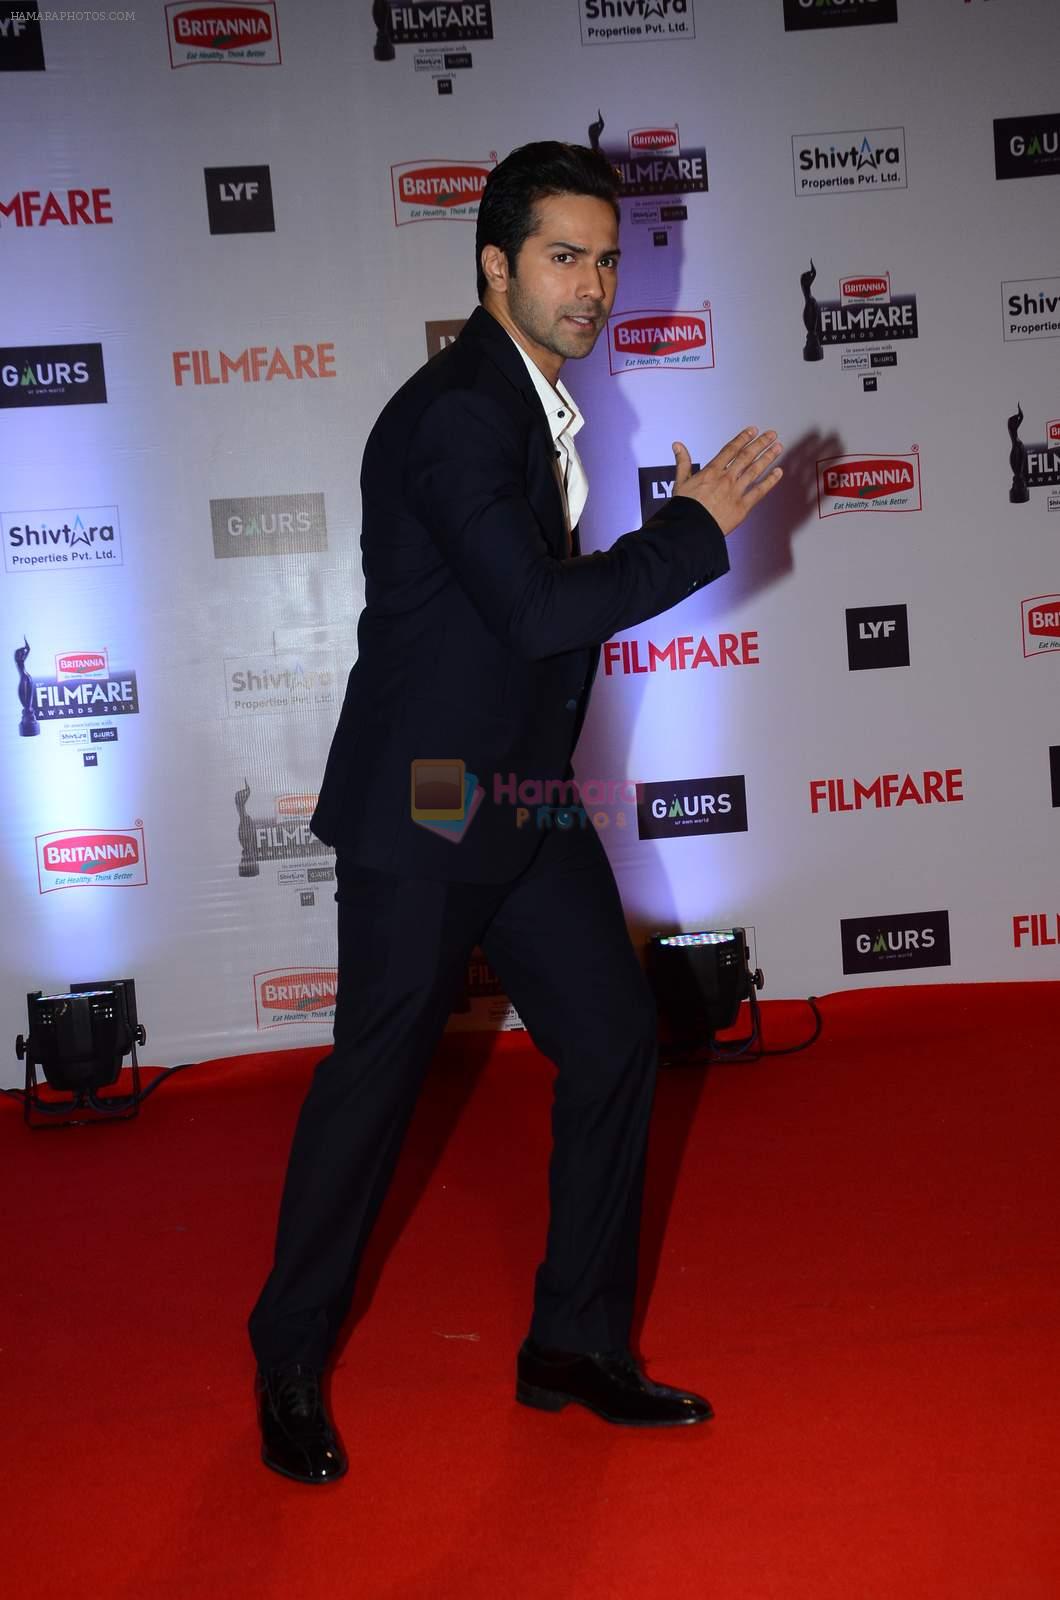 Varun Dhawan at Filmfare Awards 2016 on 15th Jan 2016